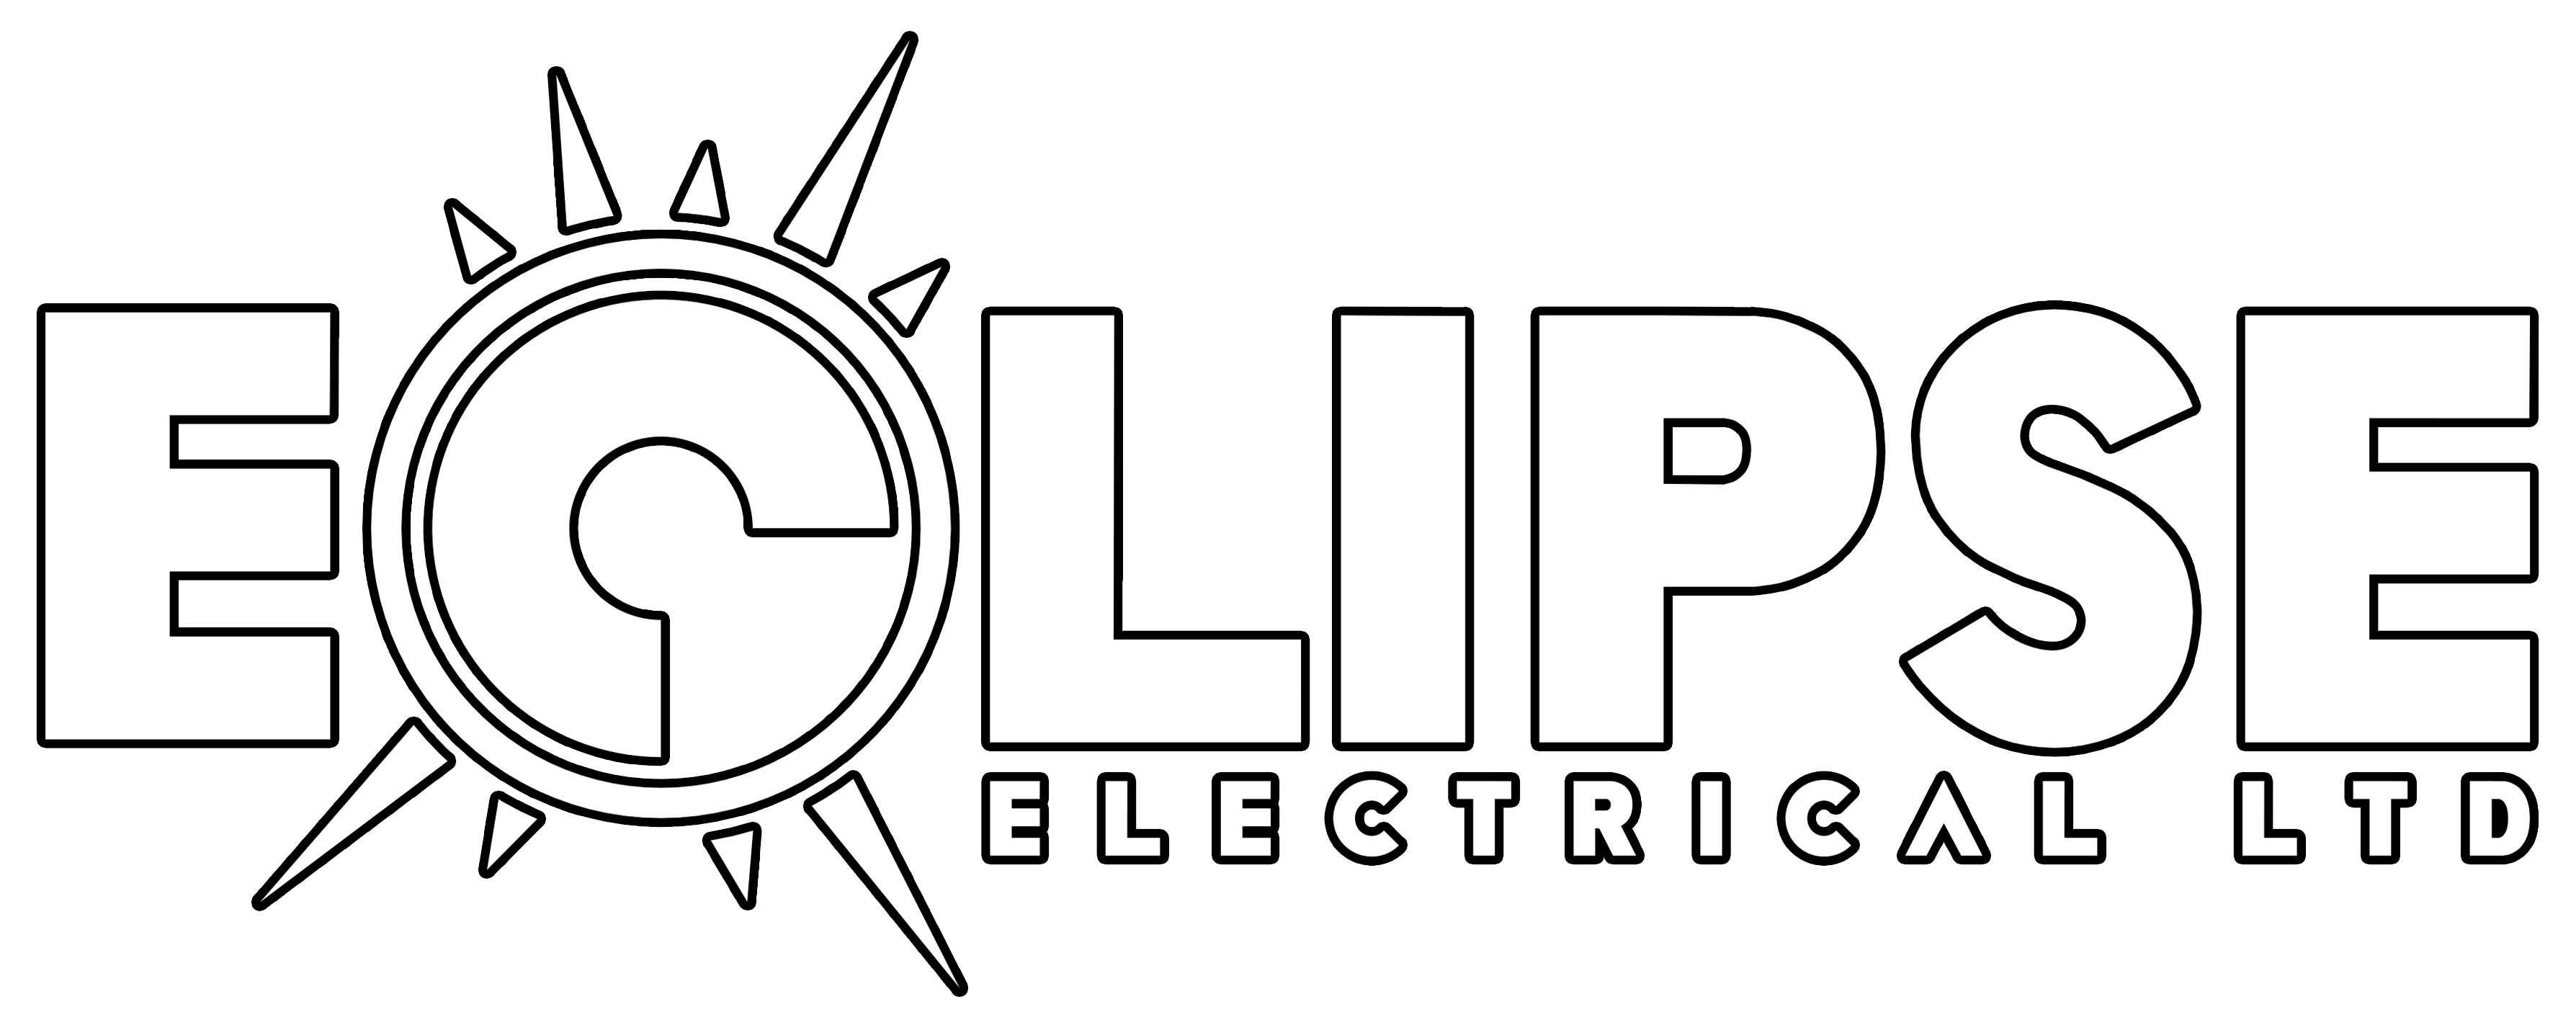 Eclipse Electrical Ltd